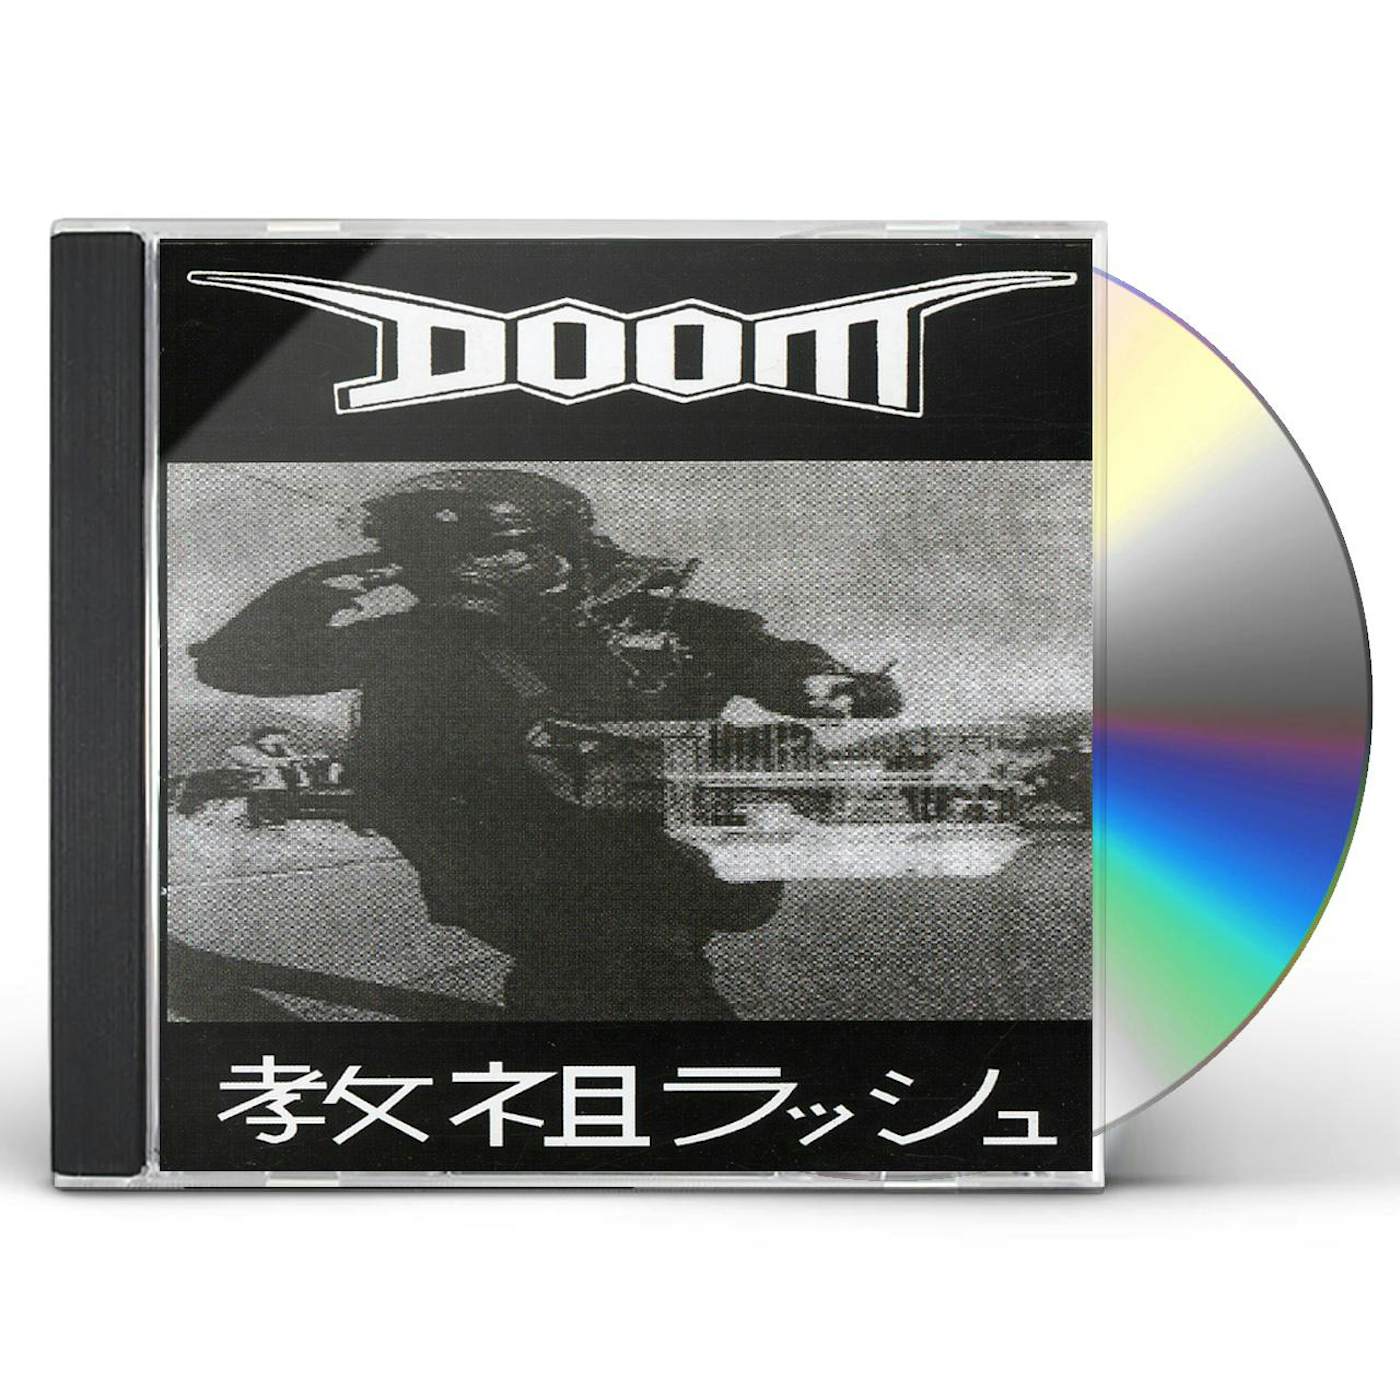 Doom RUSH HOUR OF THE GODS CD